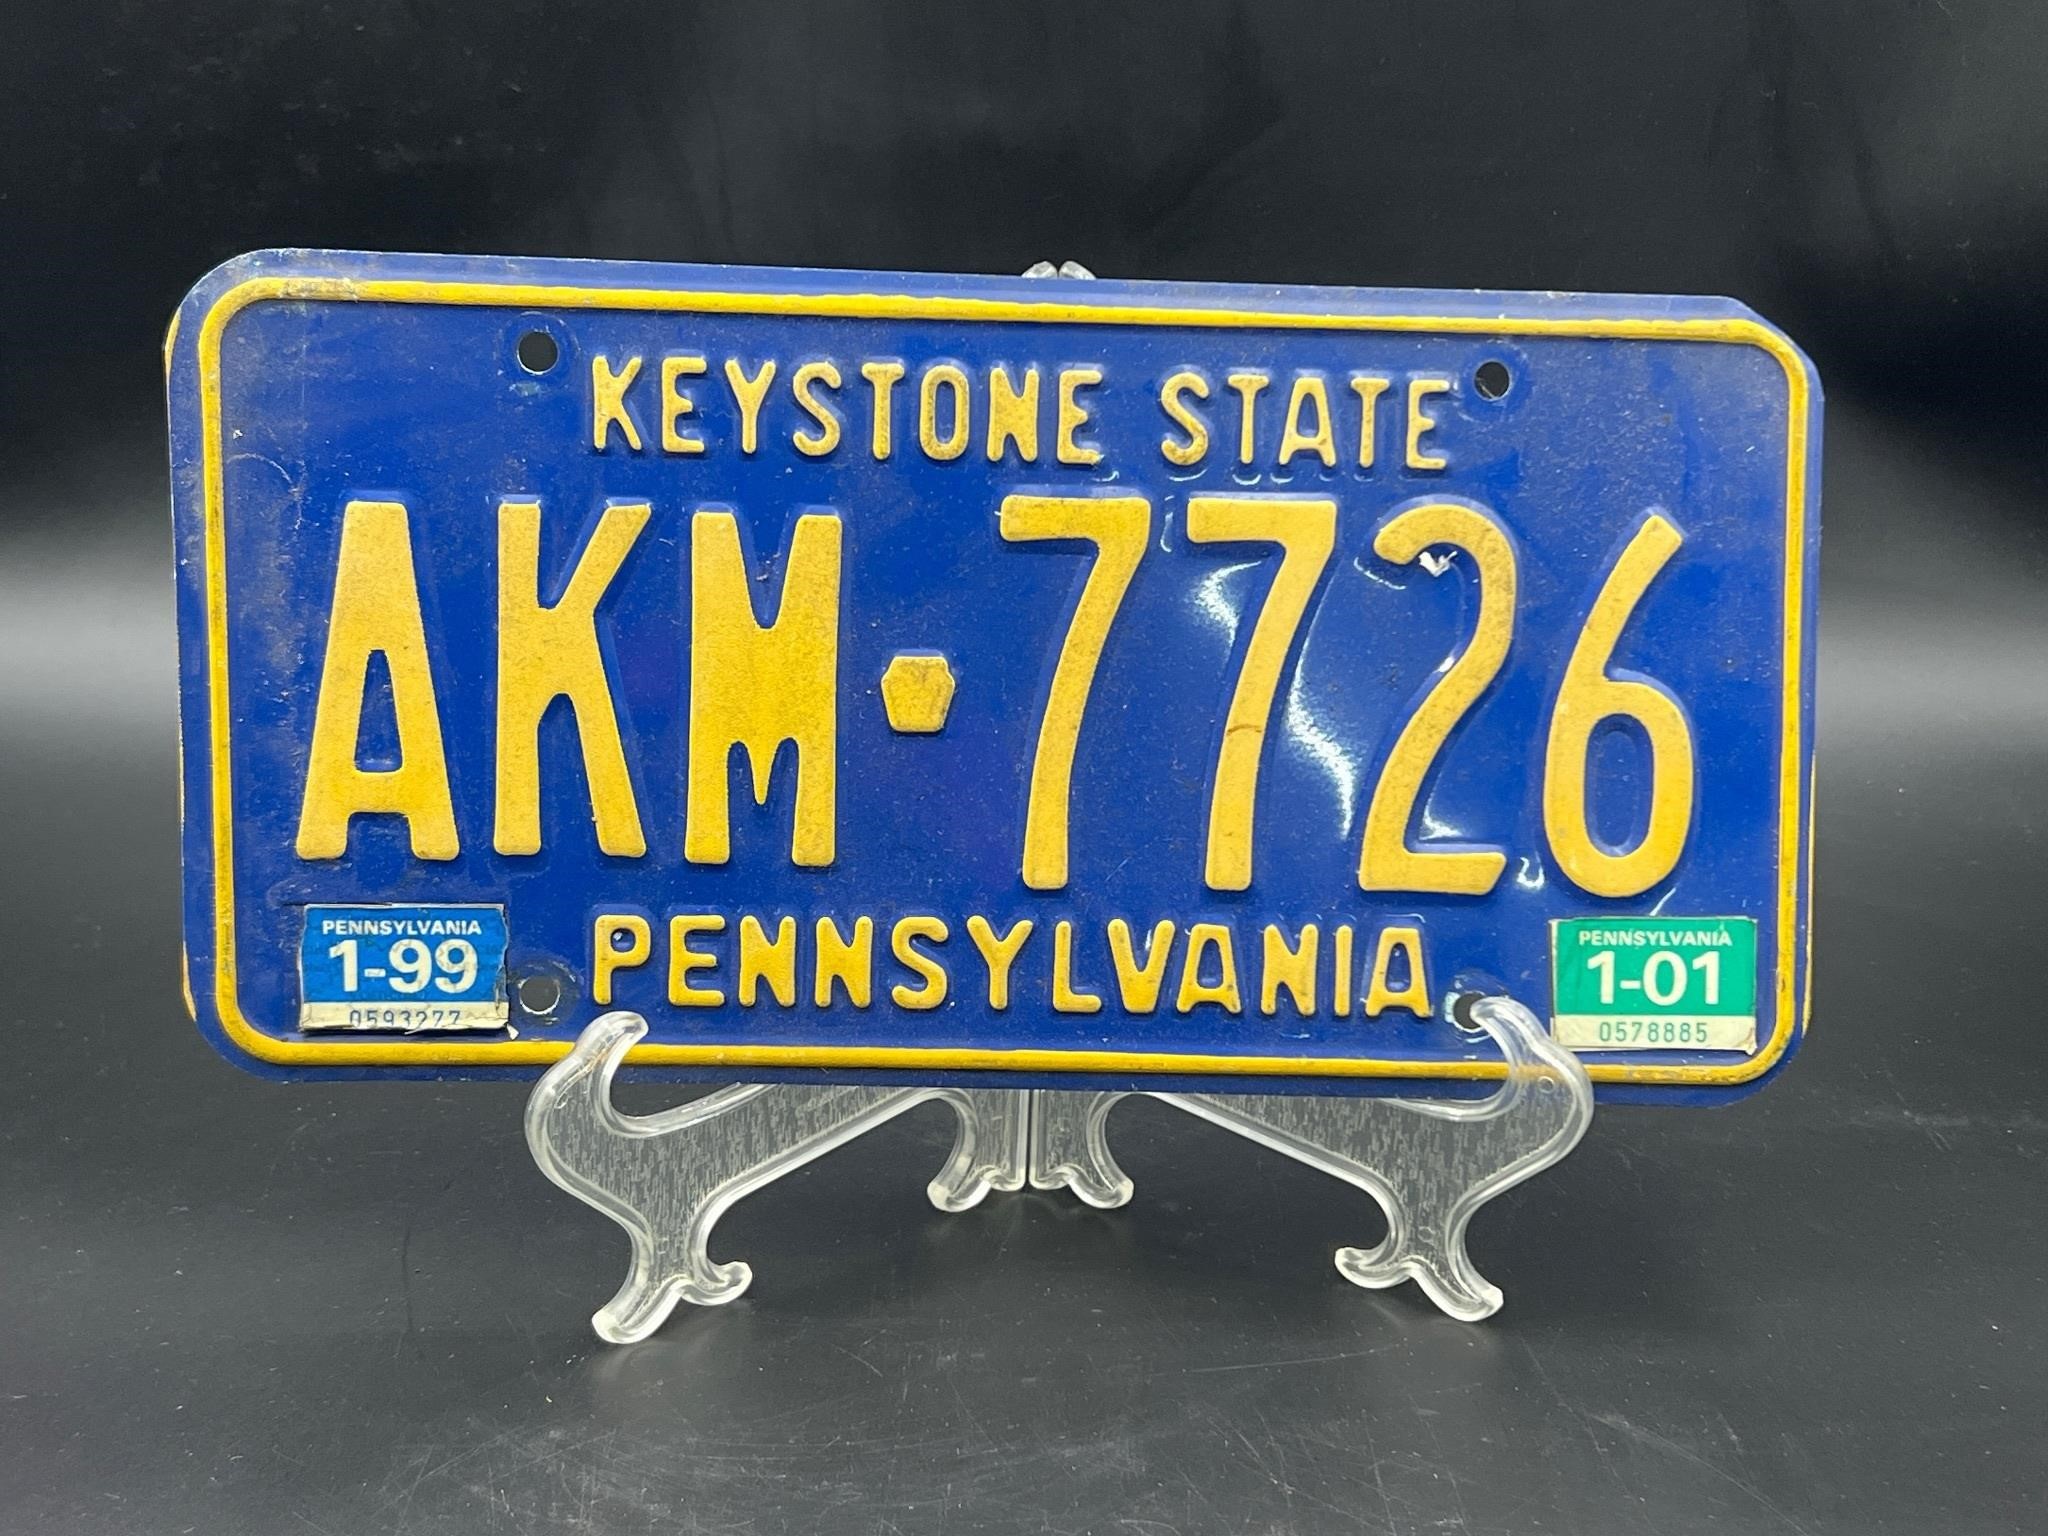 Pennsylvania license plate keystone state tag